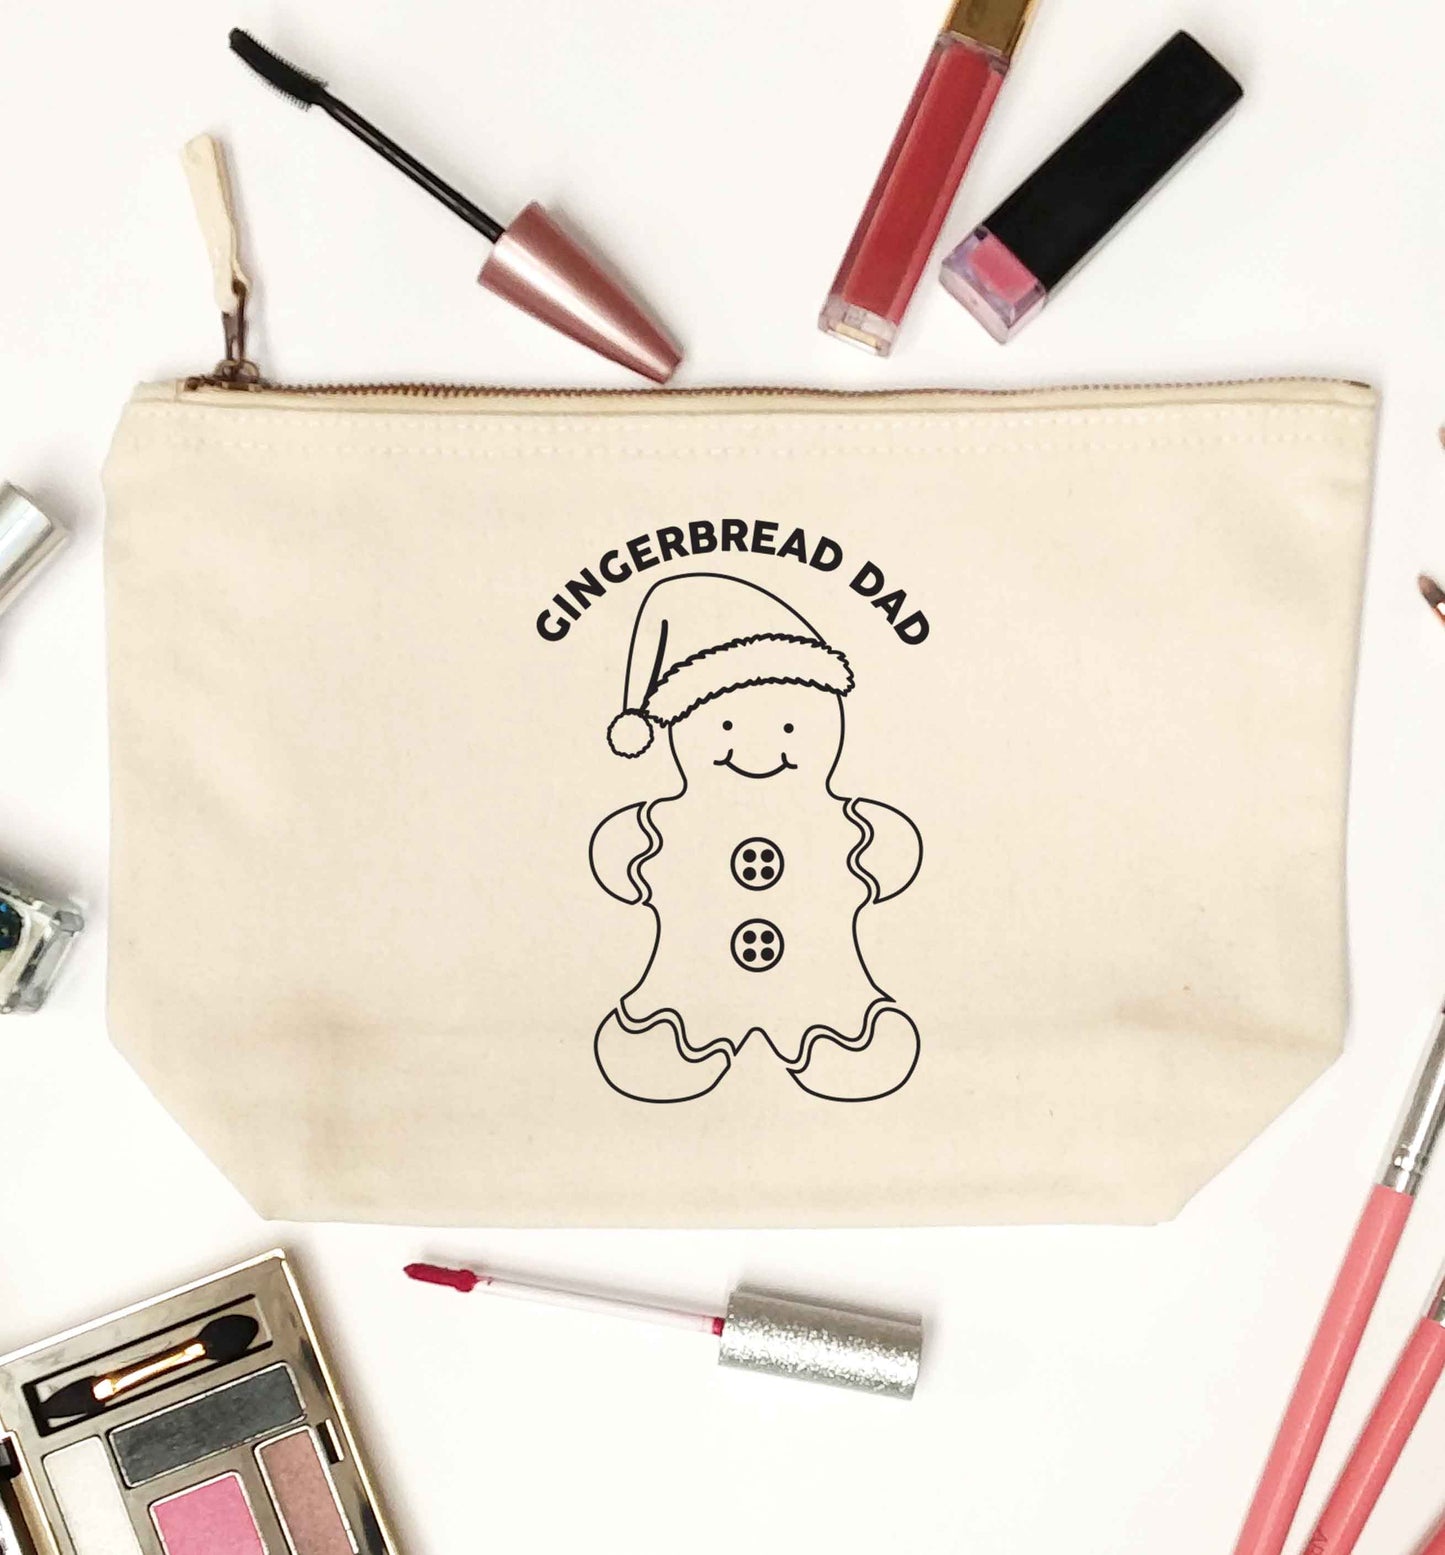 Merry Christmas natural makeup bag